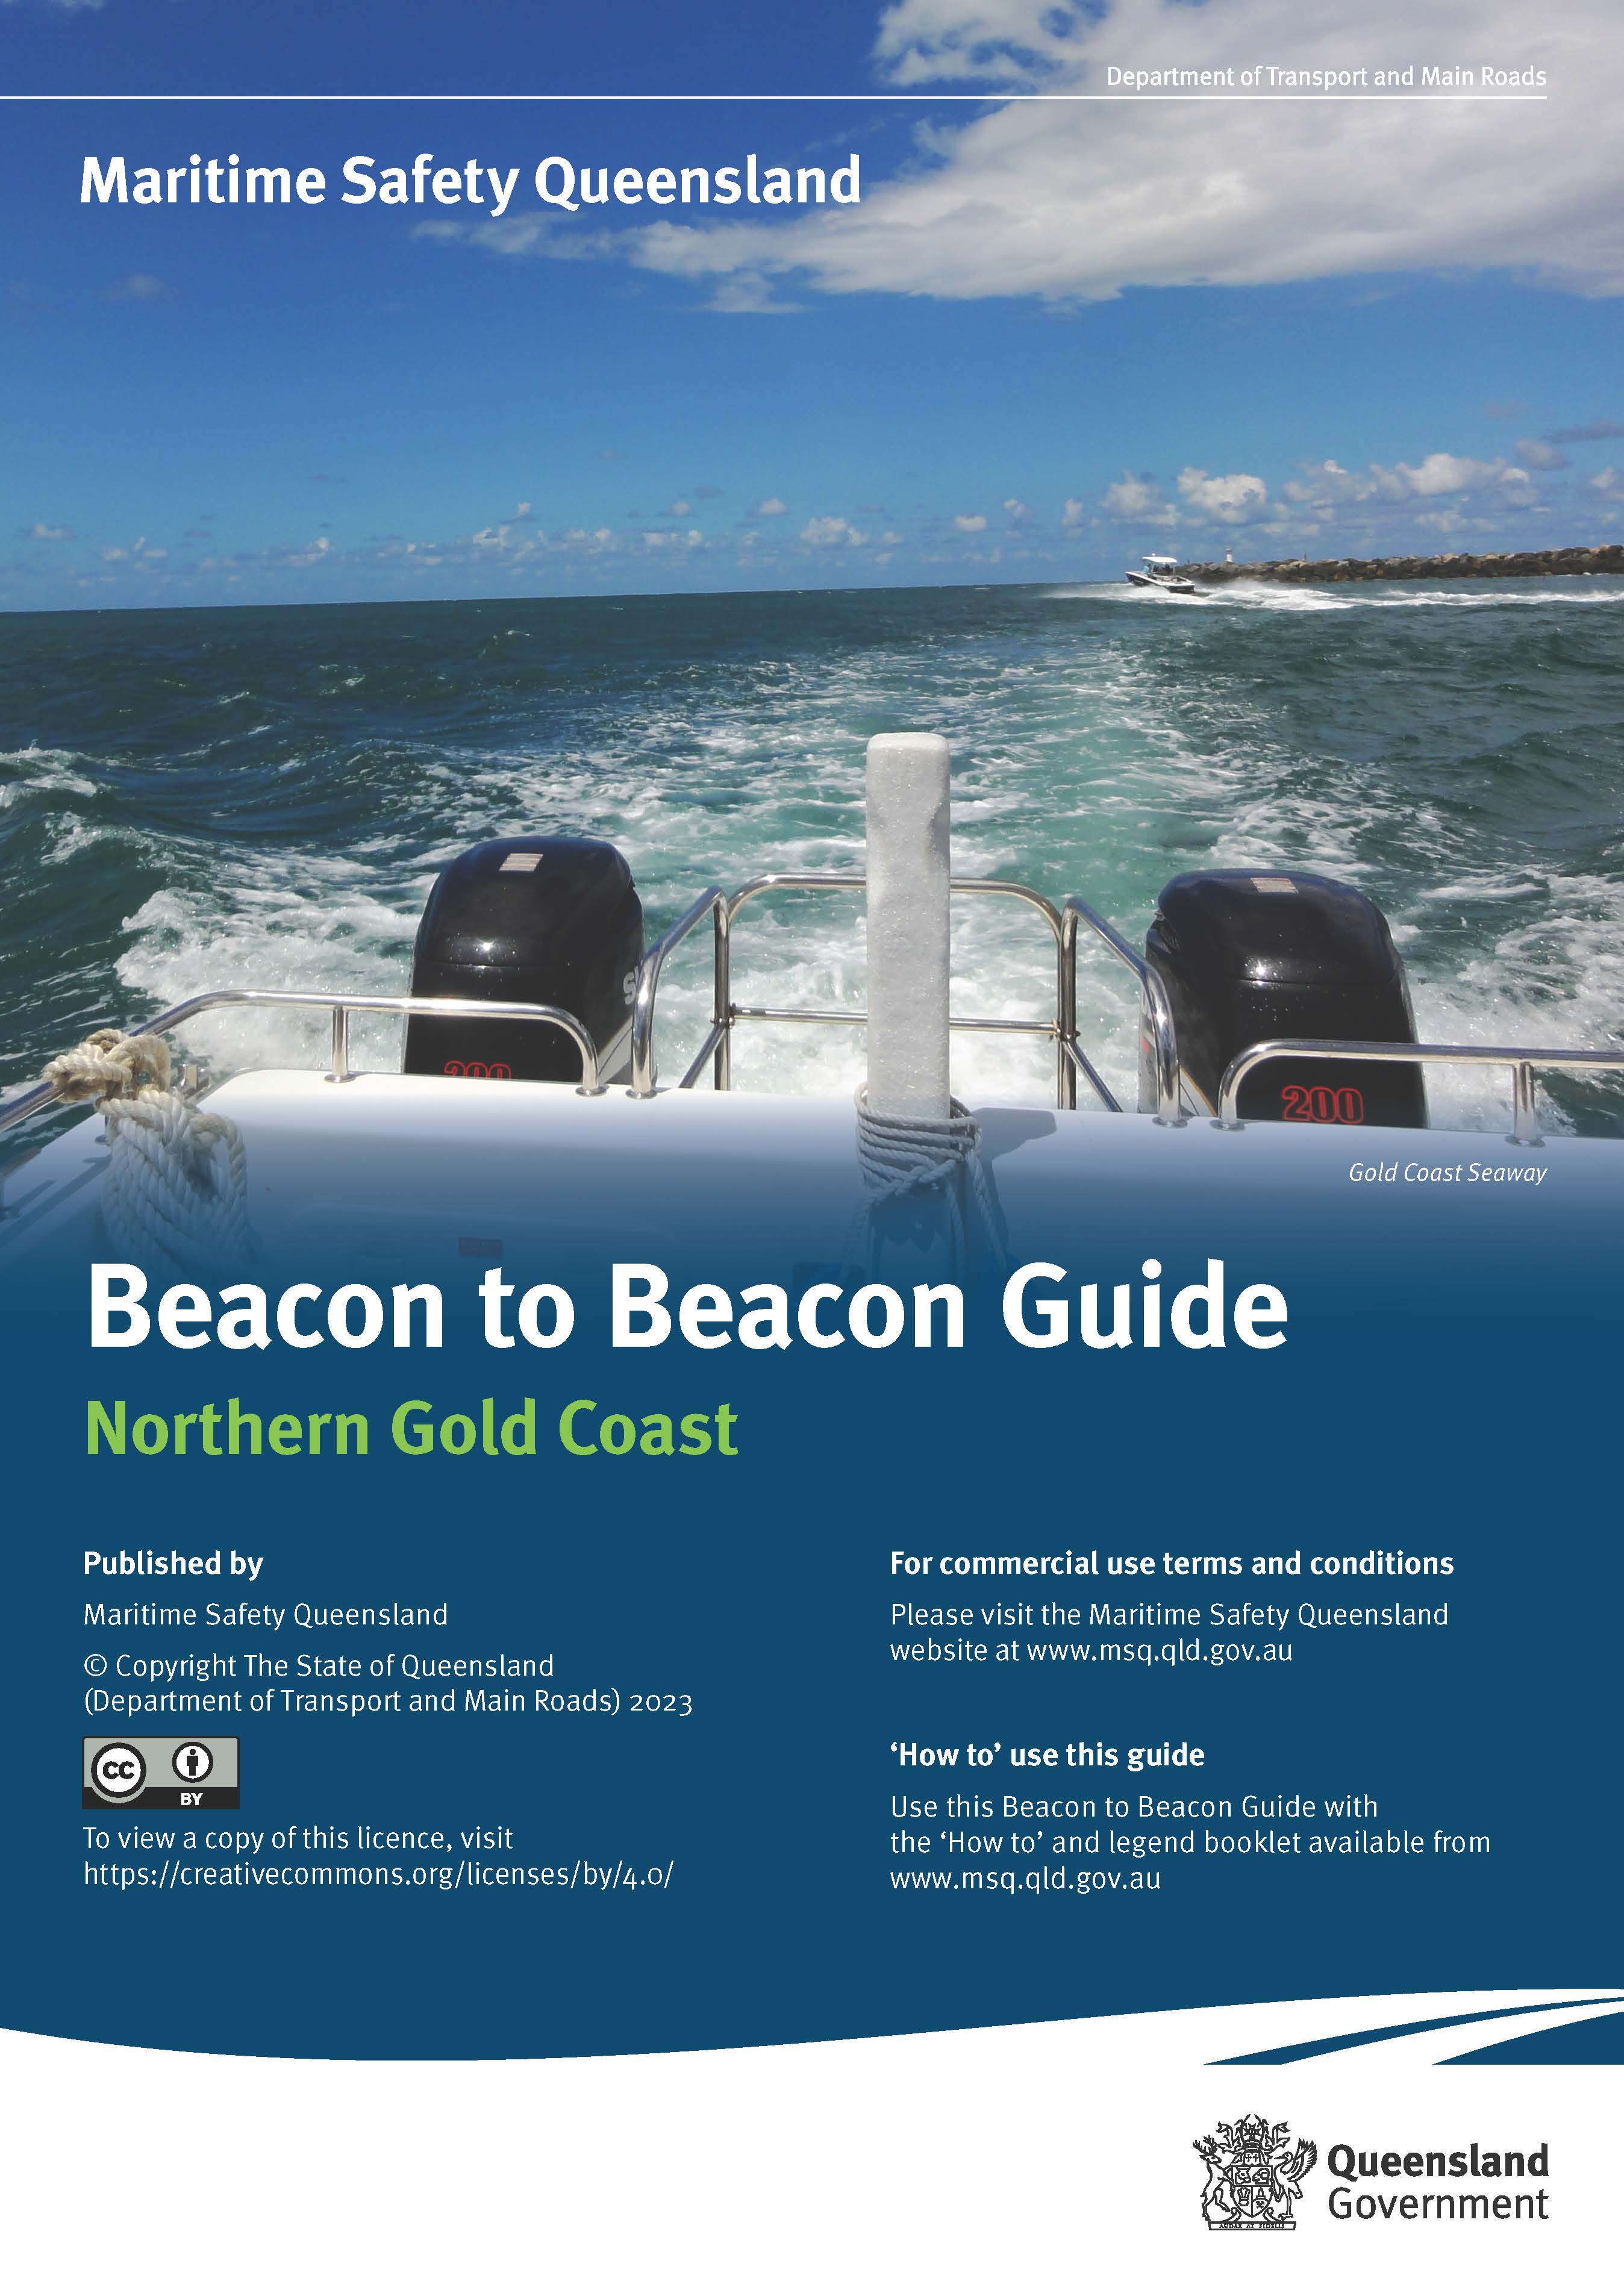 Beacon to Beacon Guide—Northern Gold Coast